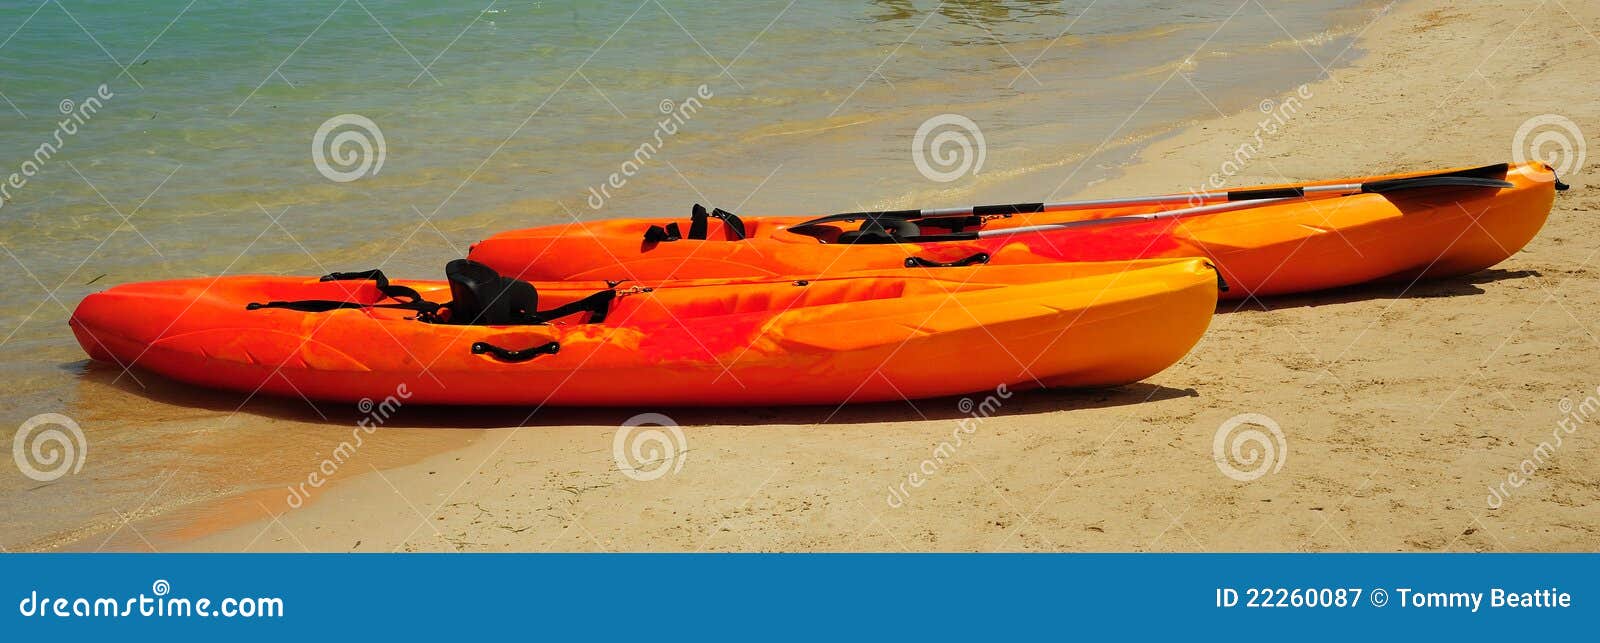 Kayaks on the Beach stock image. Image of coast, equipment - 22260087